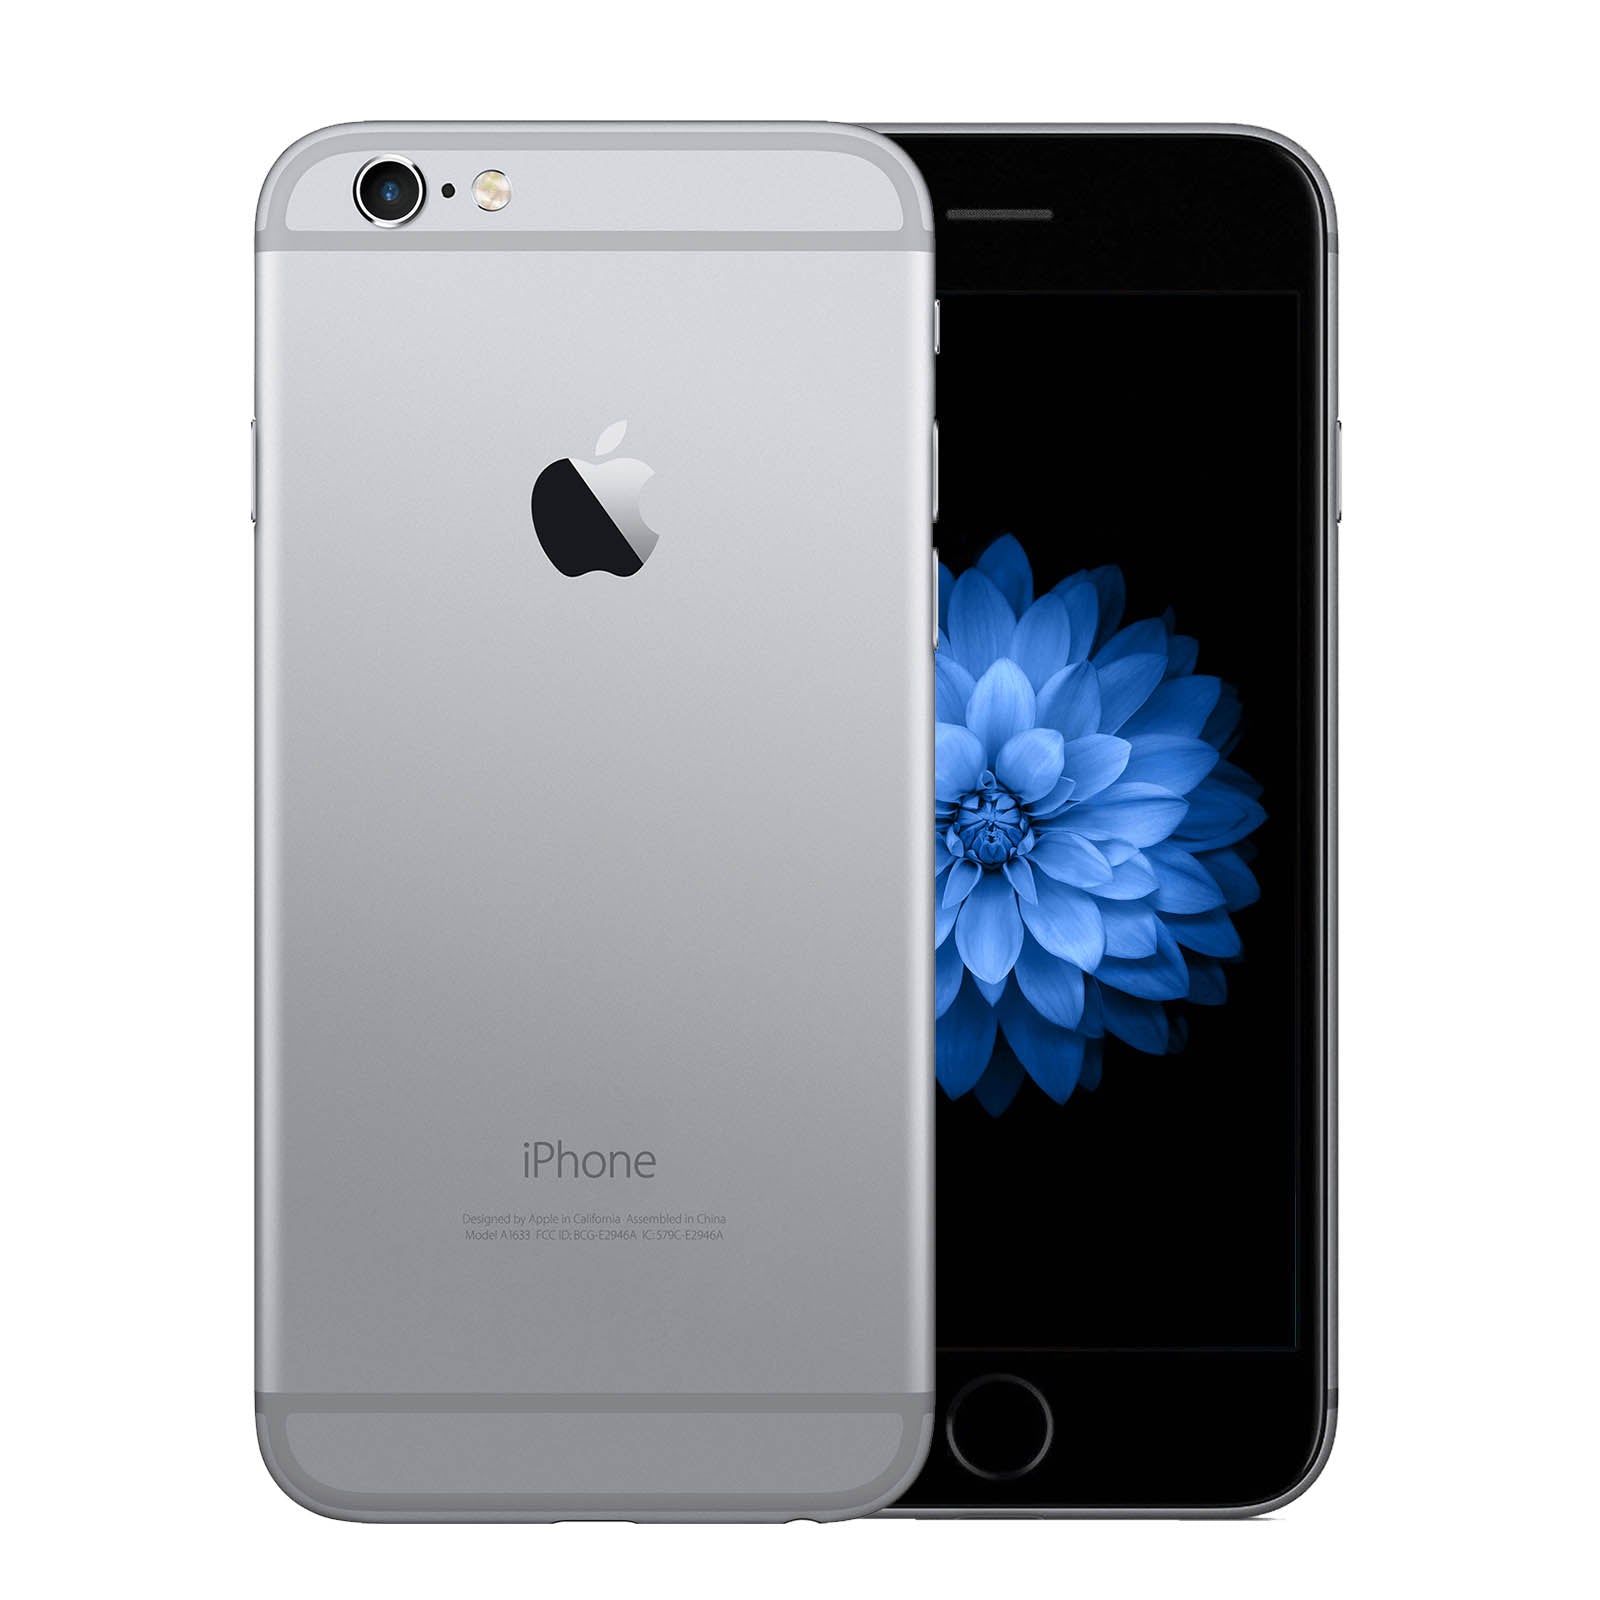 Apple iPhone 6 32GB Space Grey Very Good - Unlocked